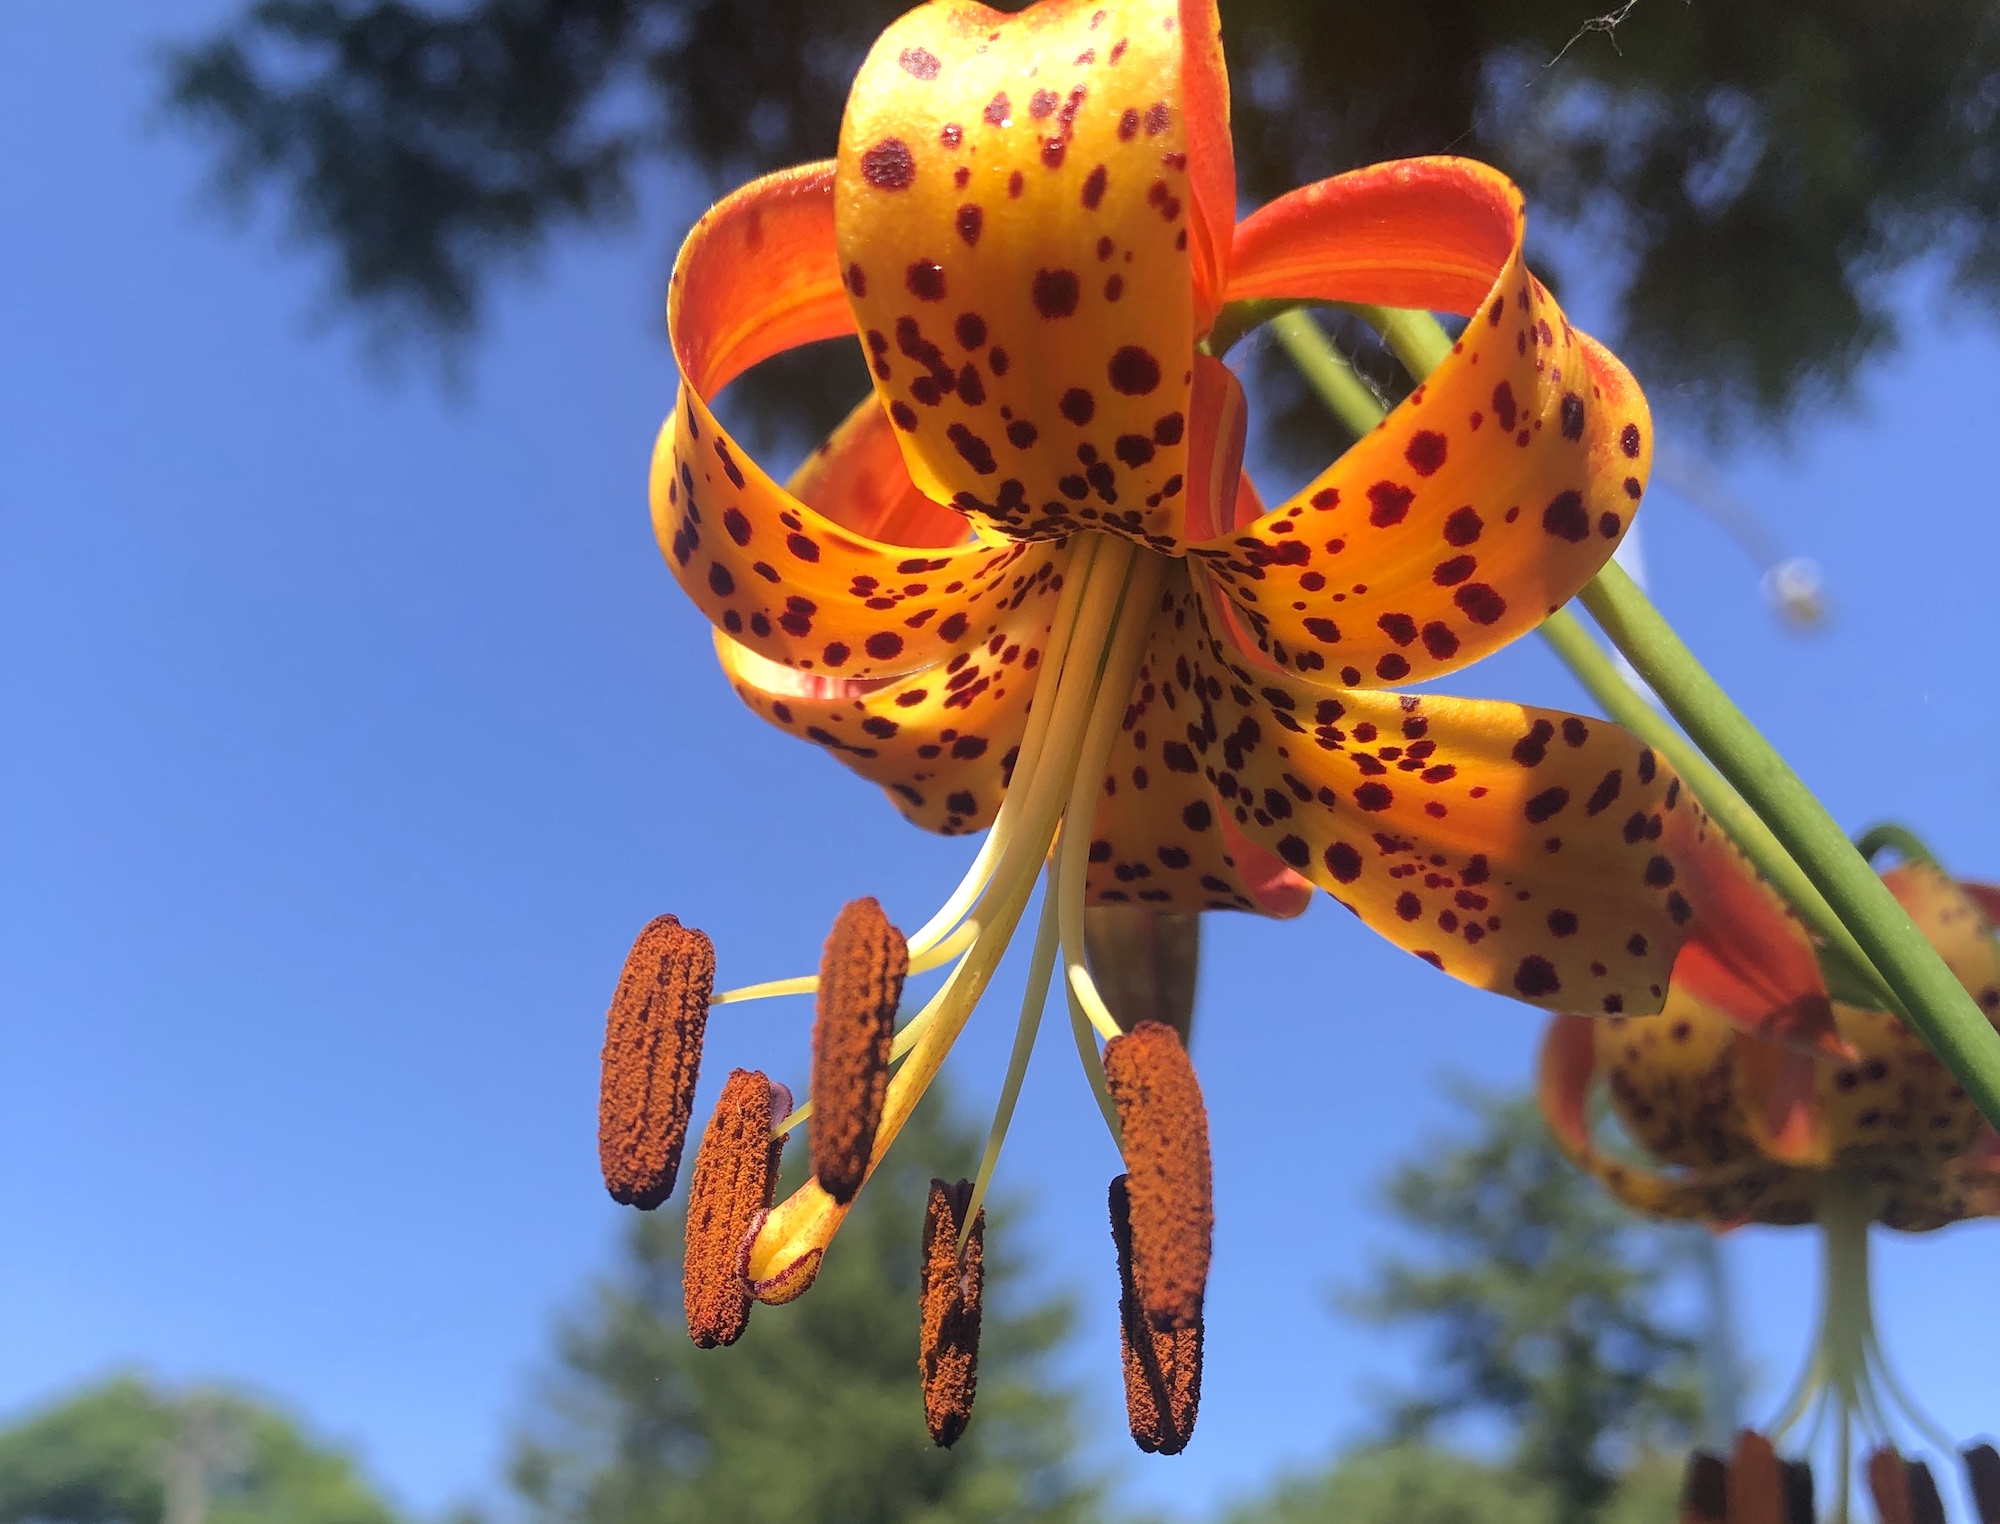 Michigan Lily in Oak Savanna on July 4, 2020.